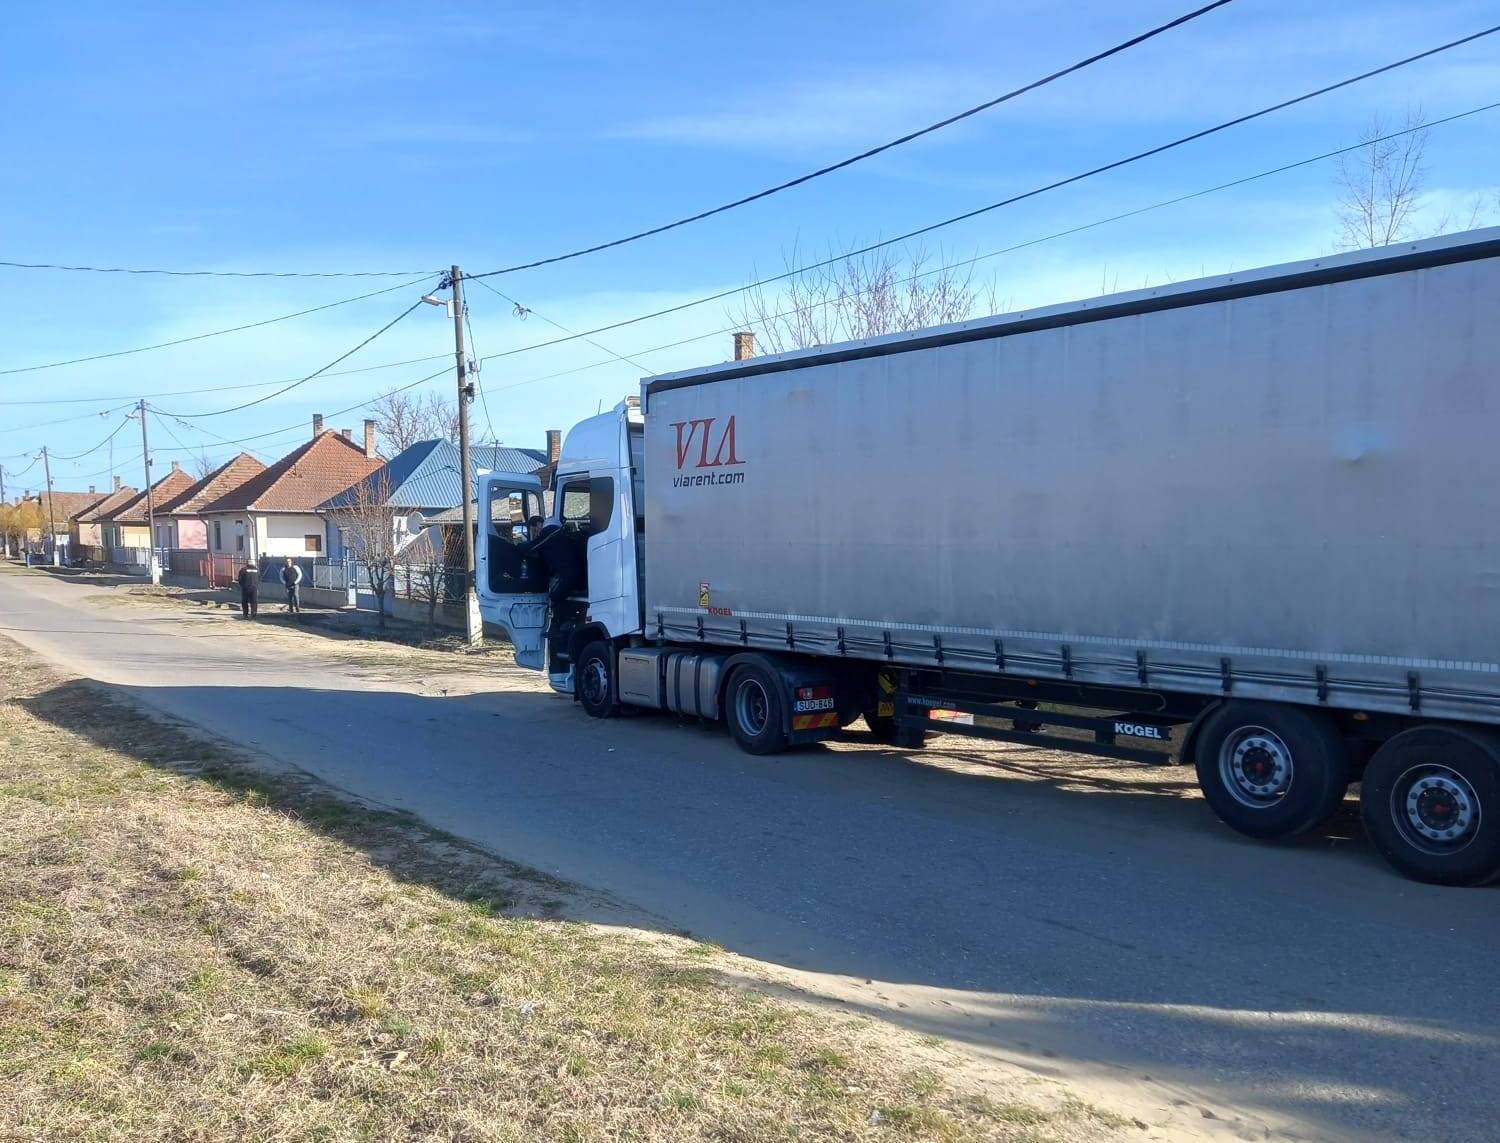 Aid lorry arrives